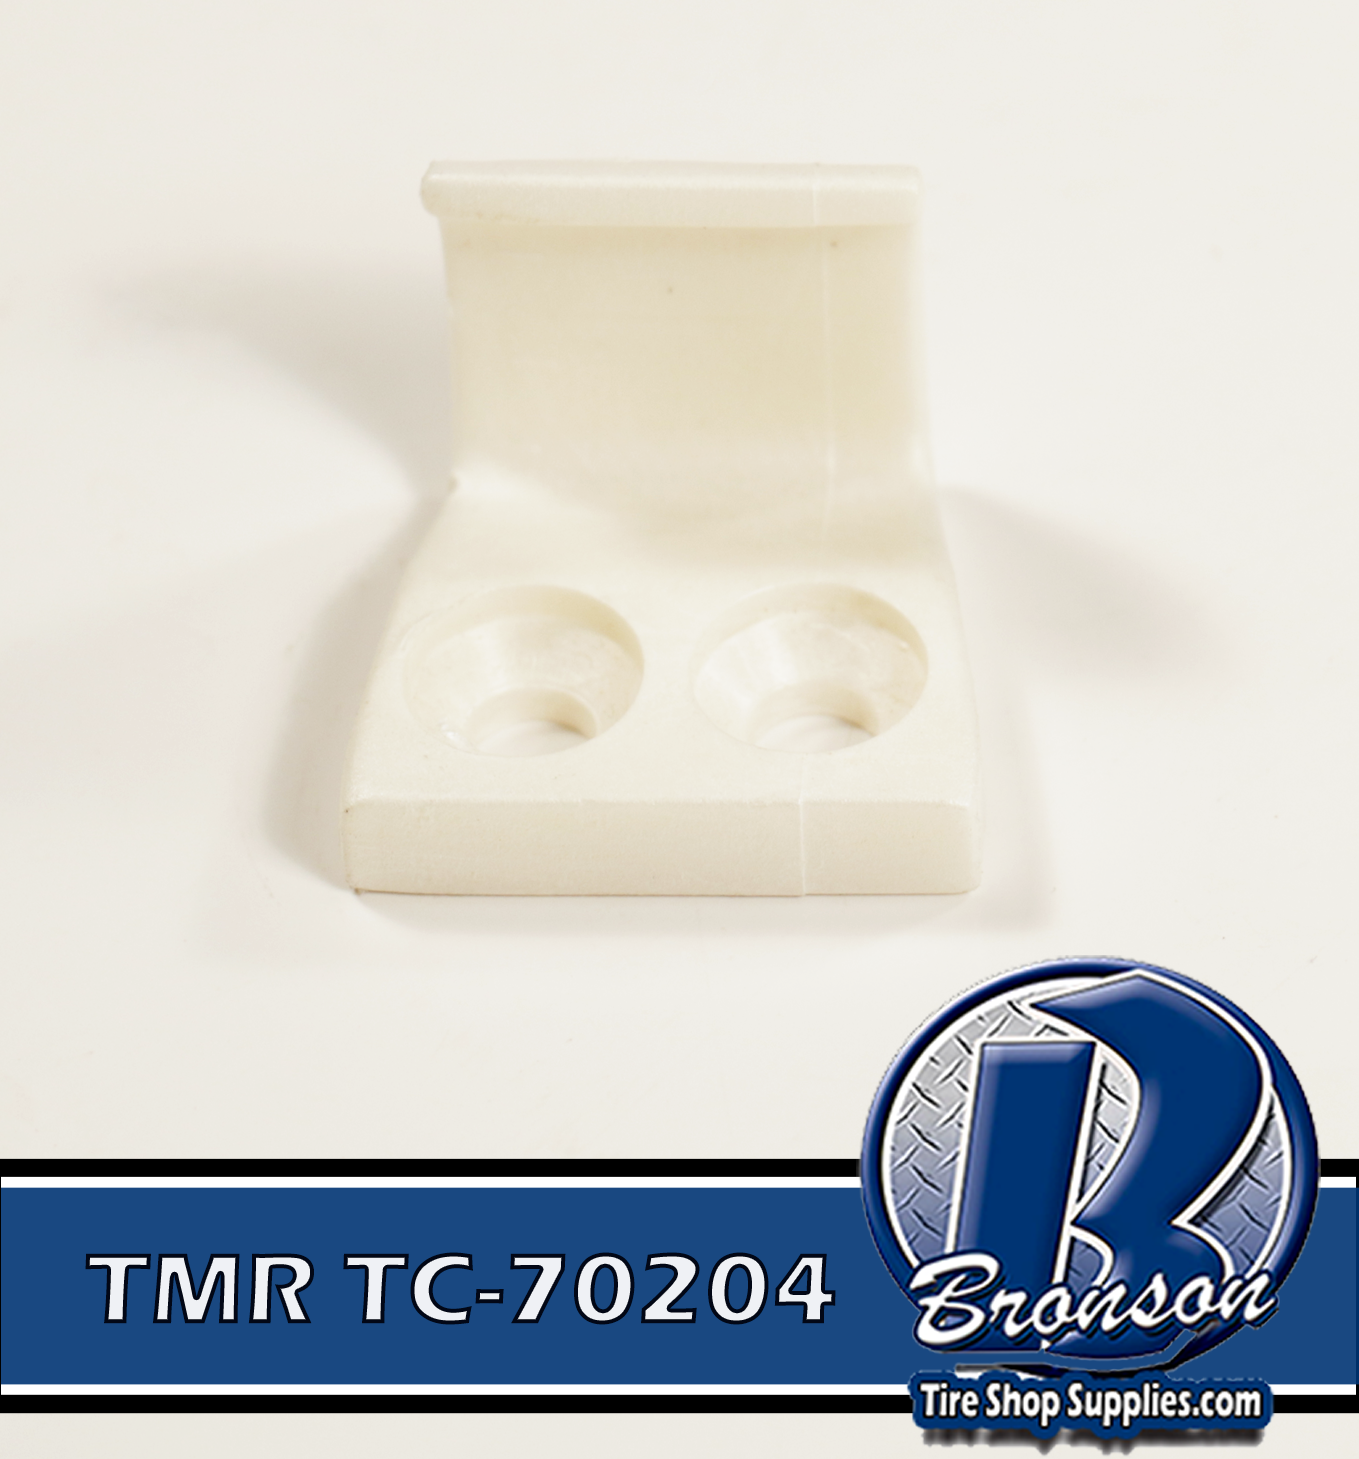 TMR TC-70204